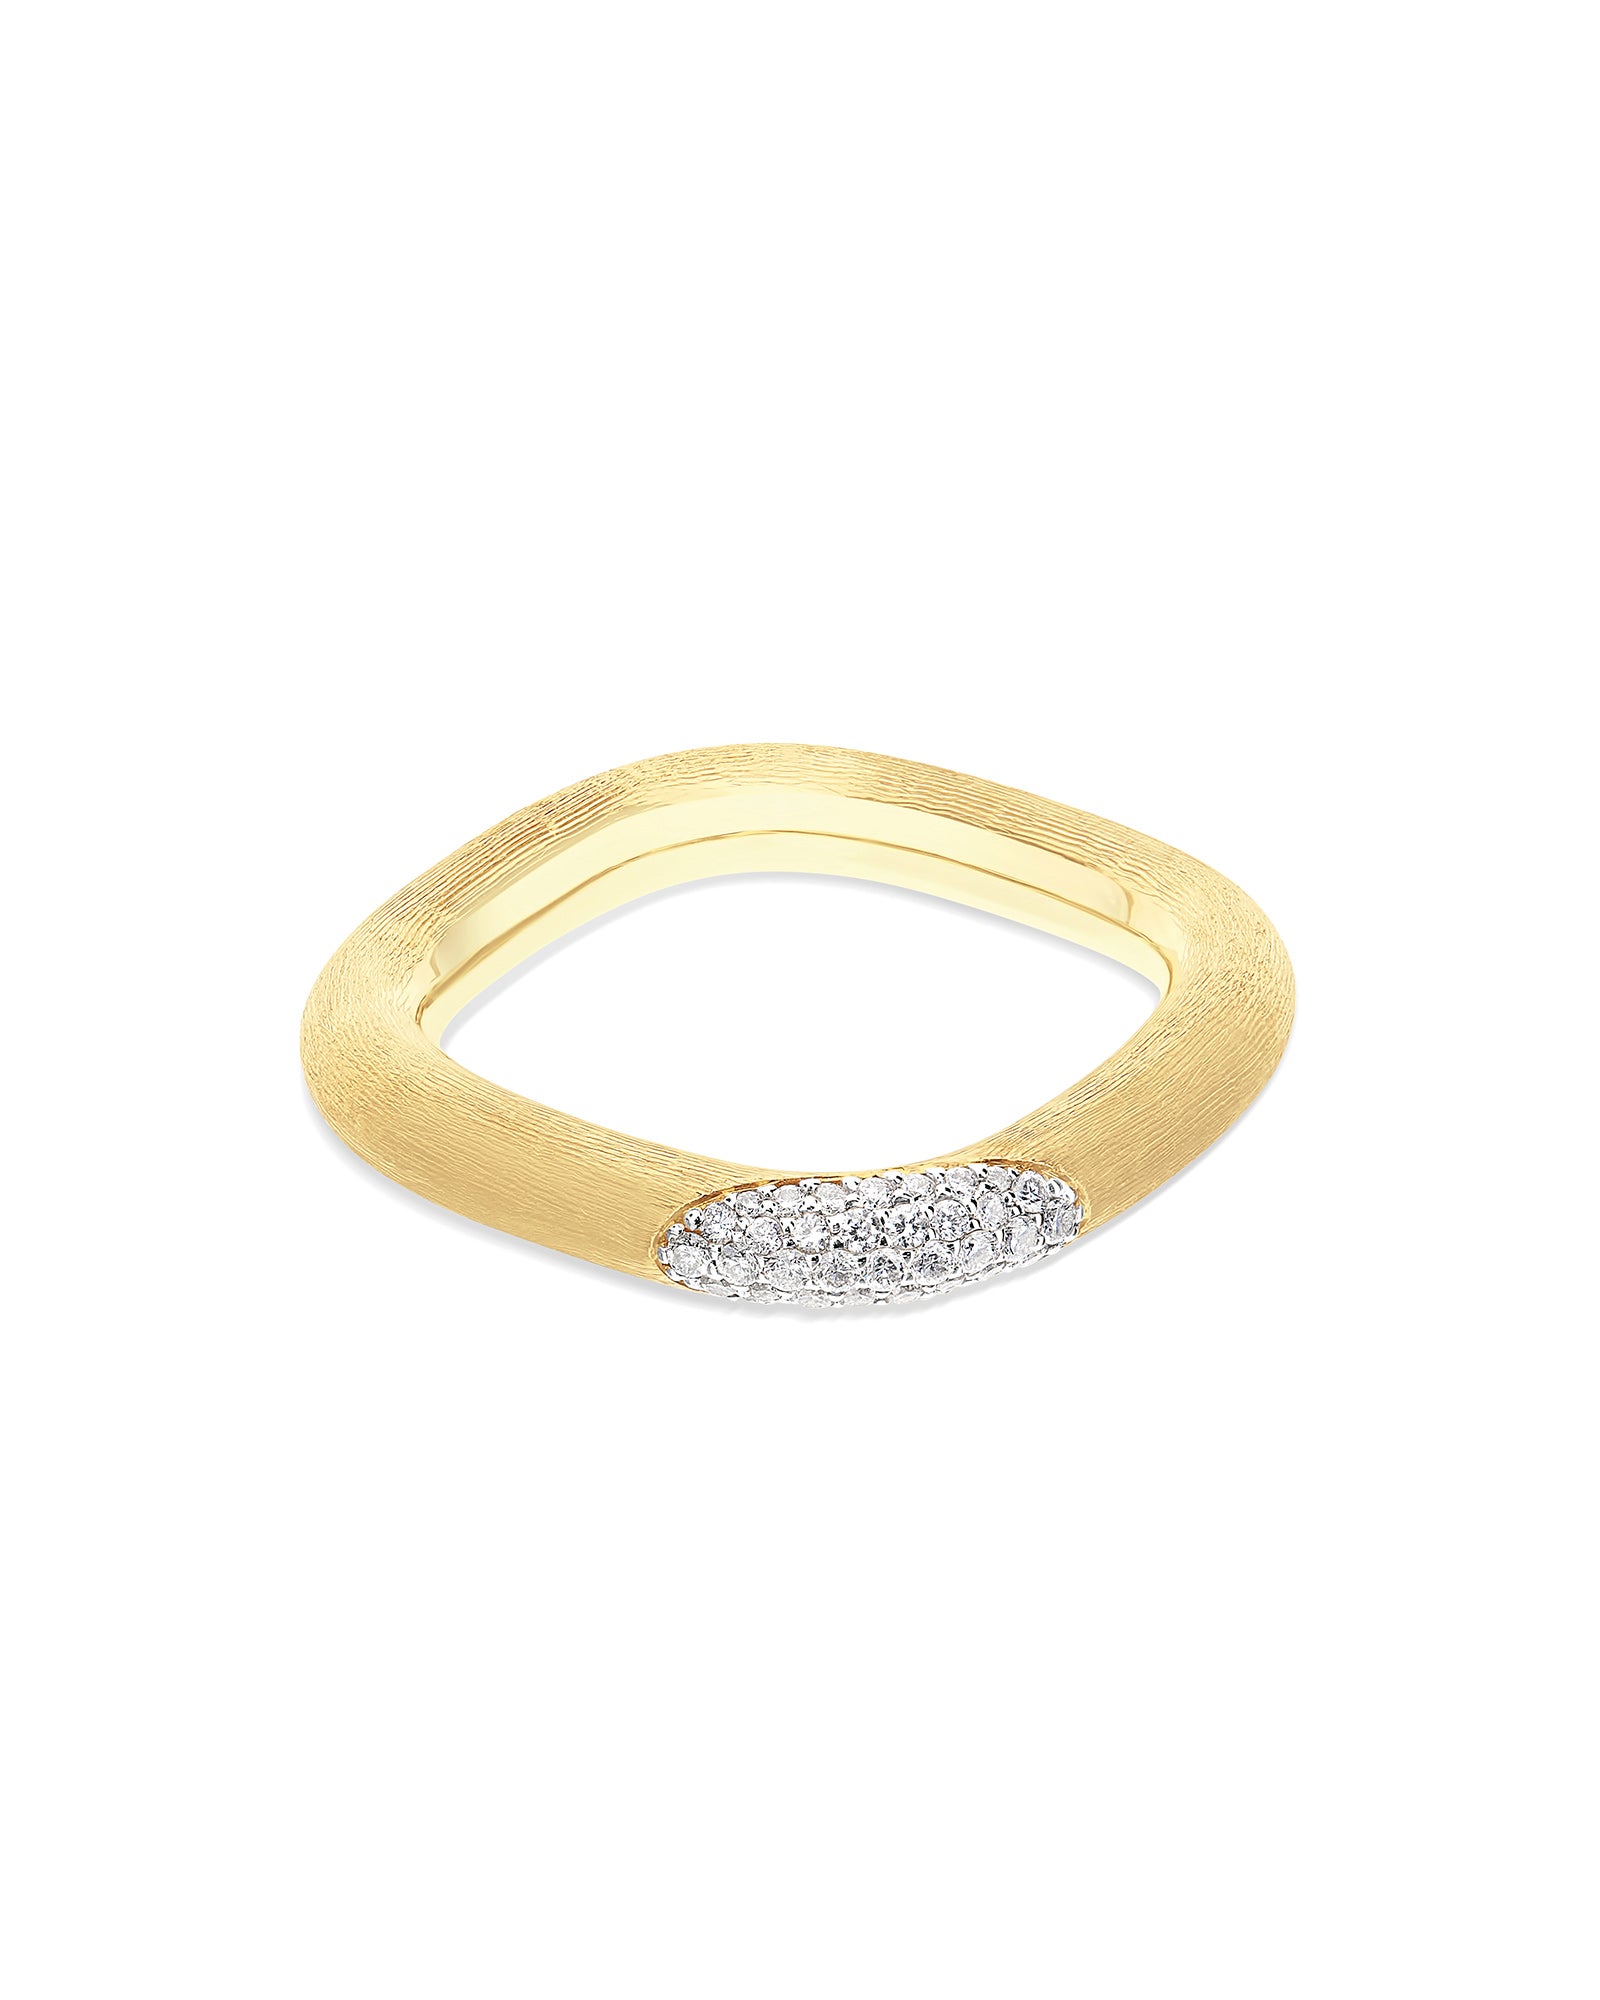 "Libera" big squared gold and diamonds ring